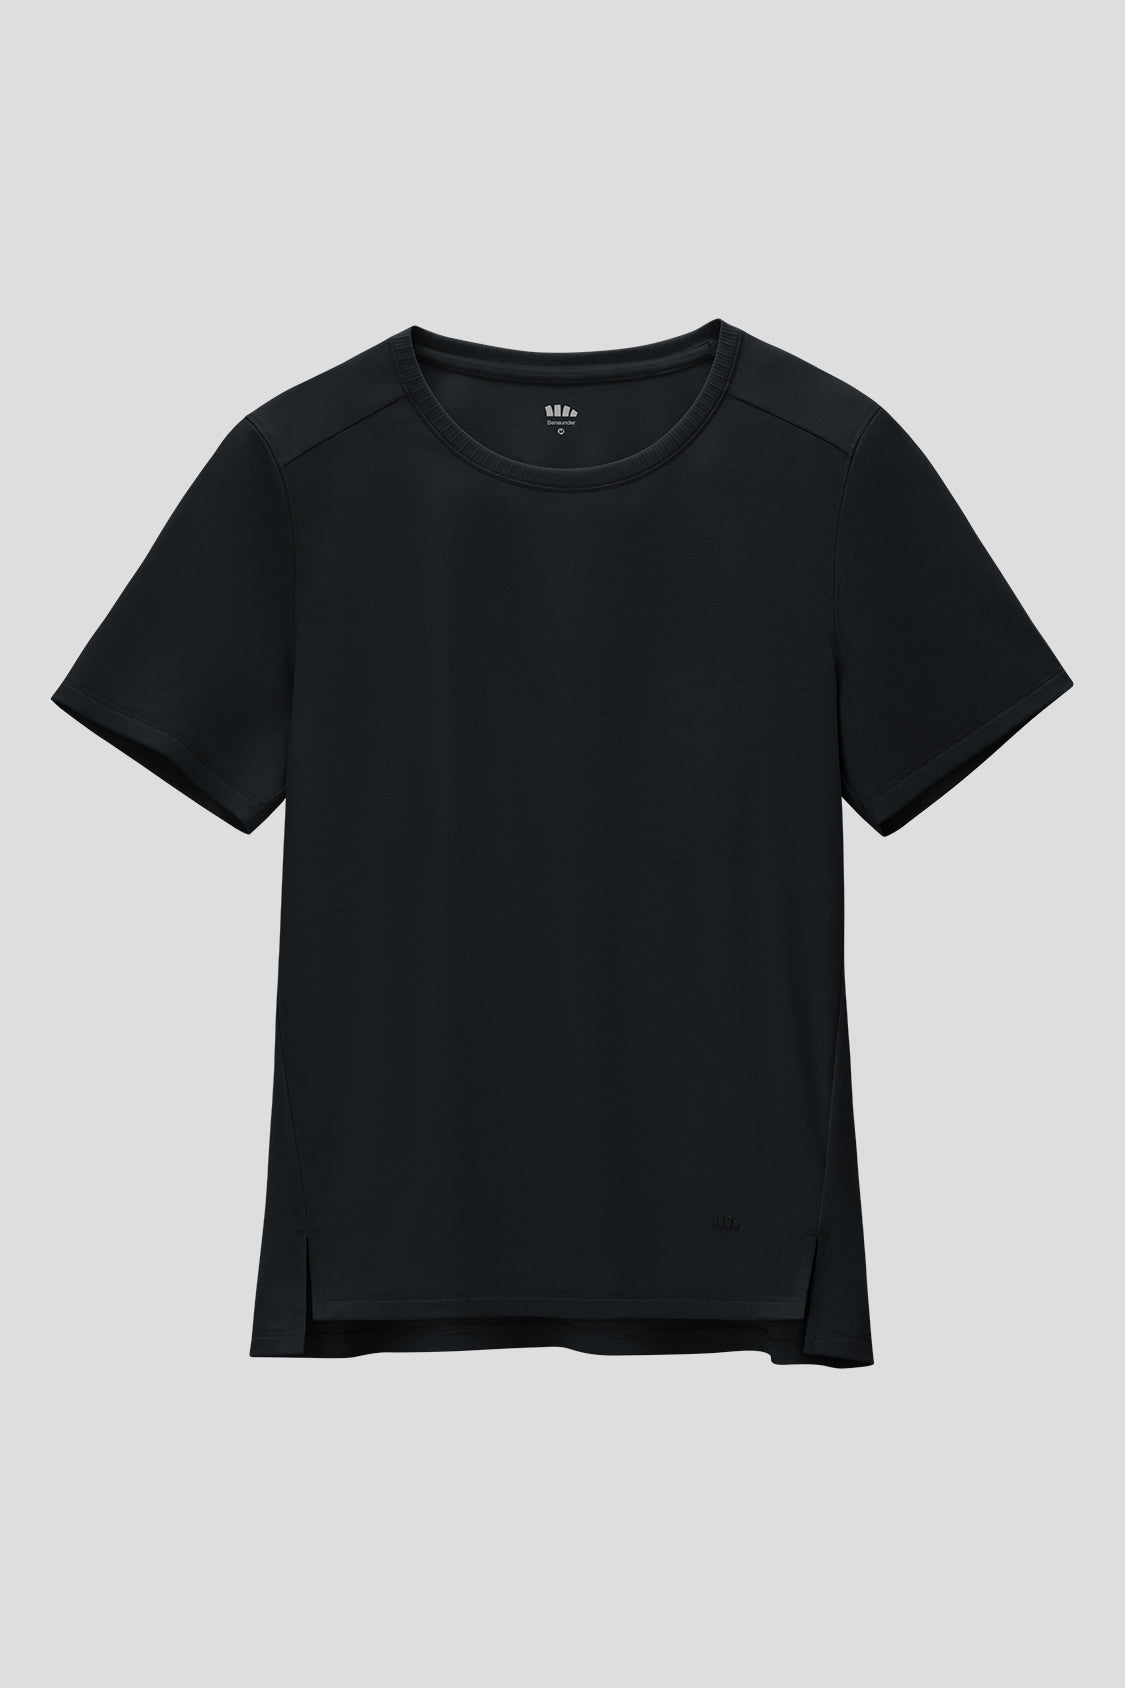 UV Protection T Shirt, Beneunder Lightweight Upf 50+ Tshirt for Women